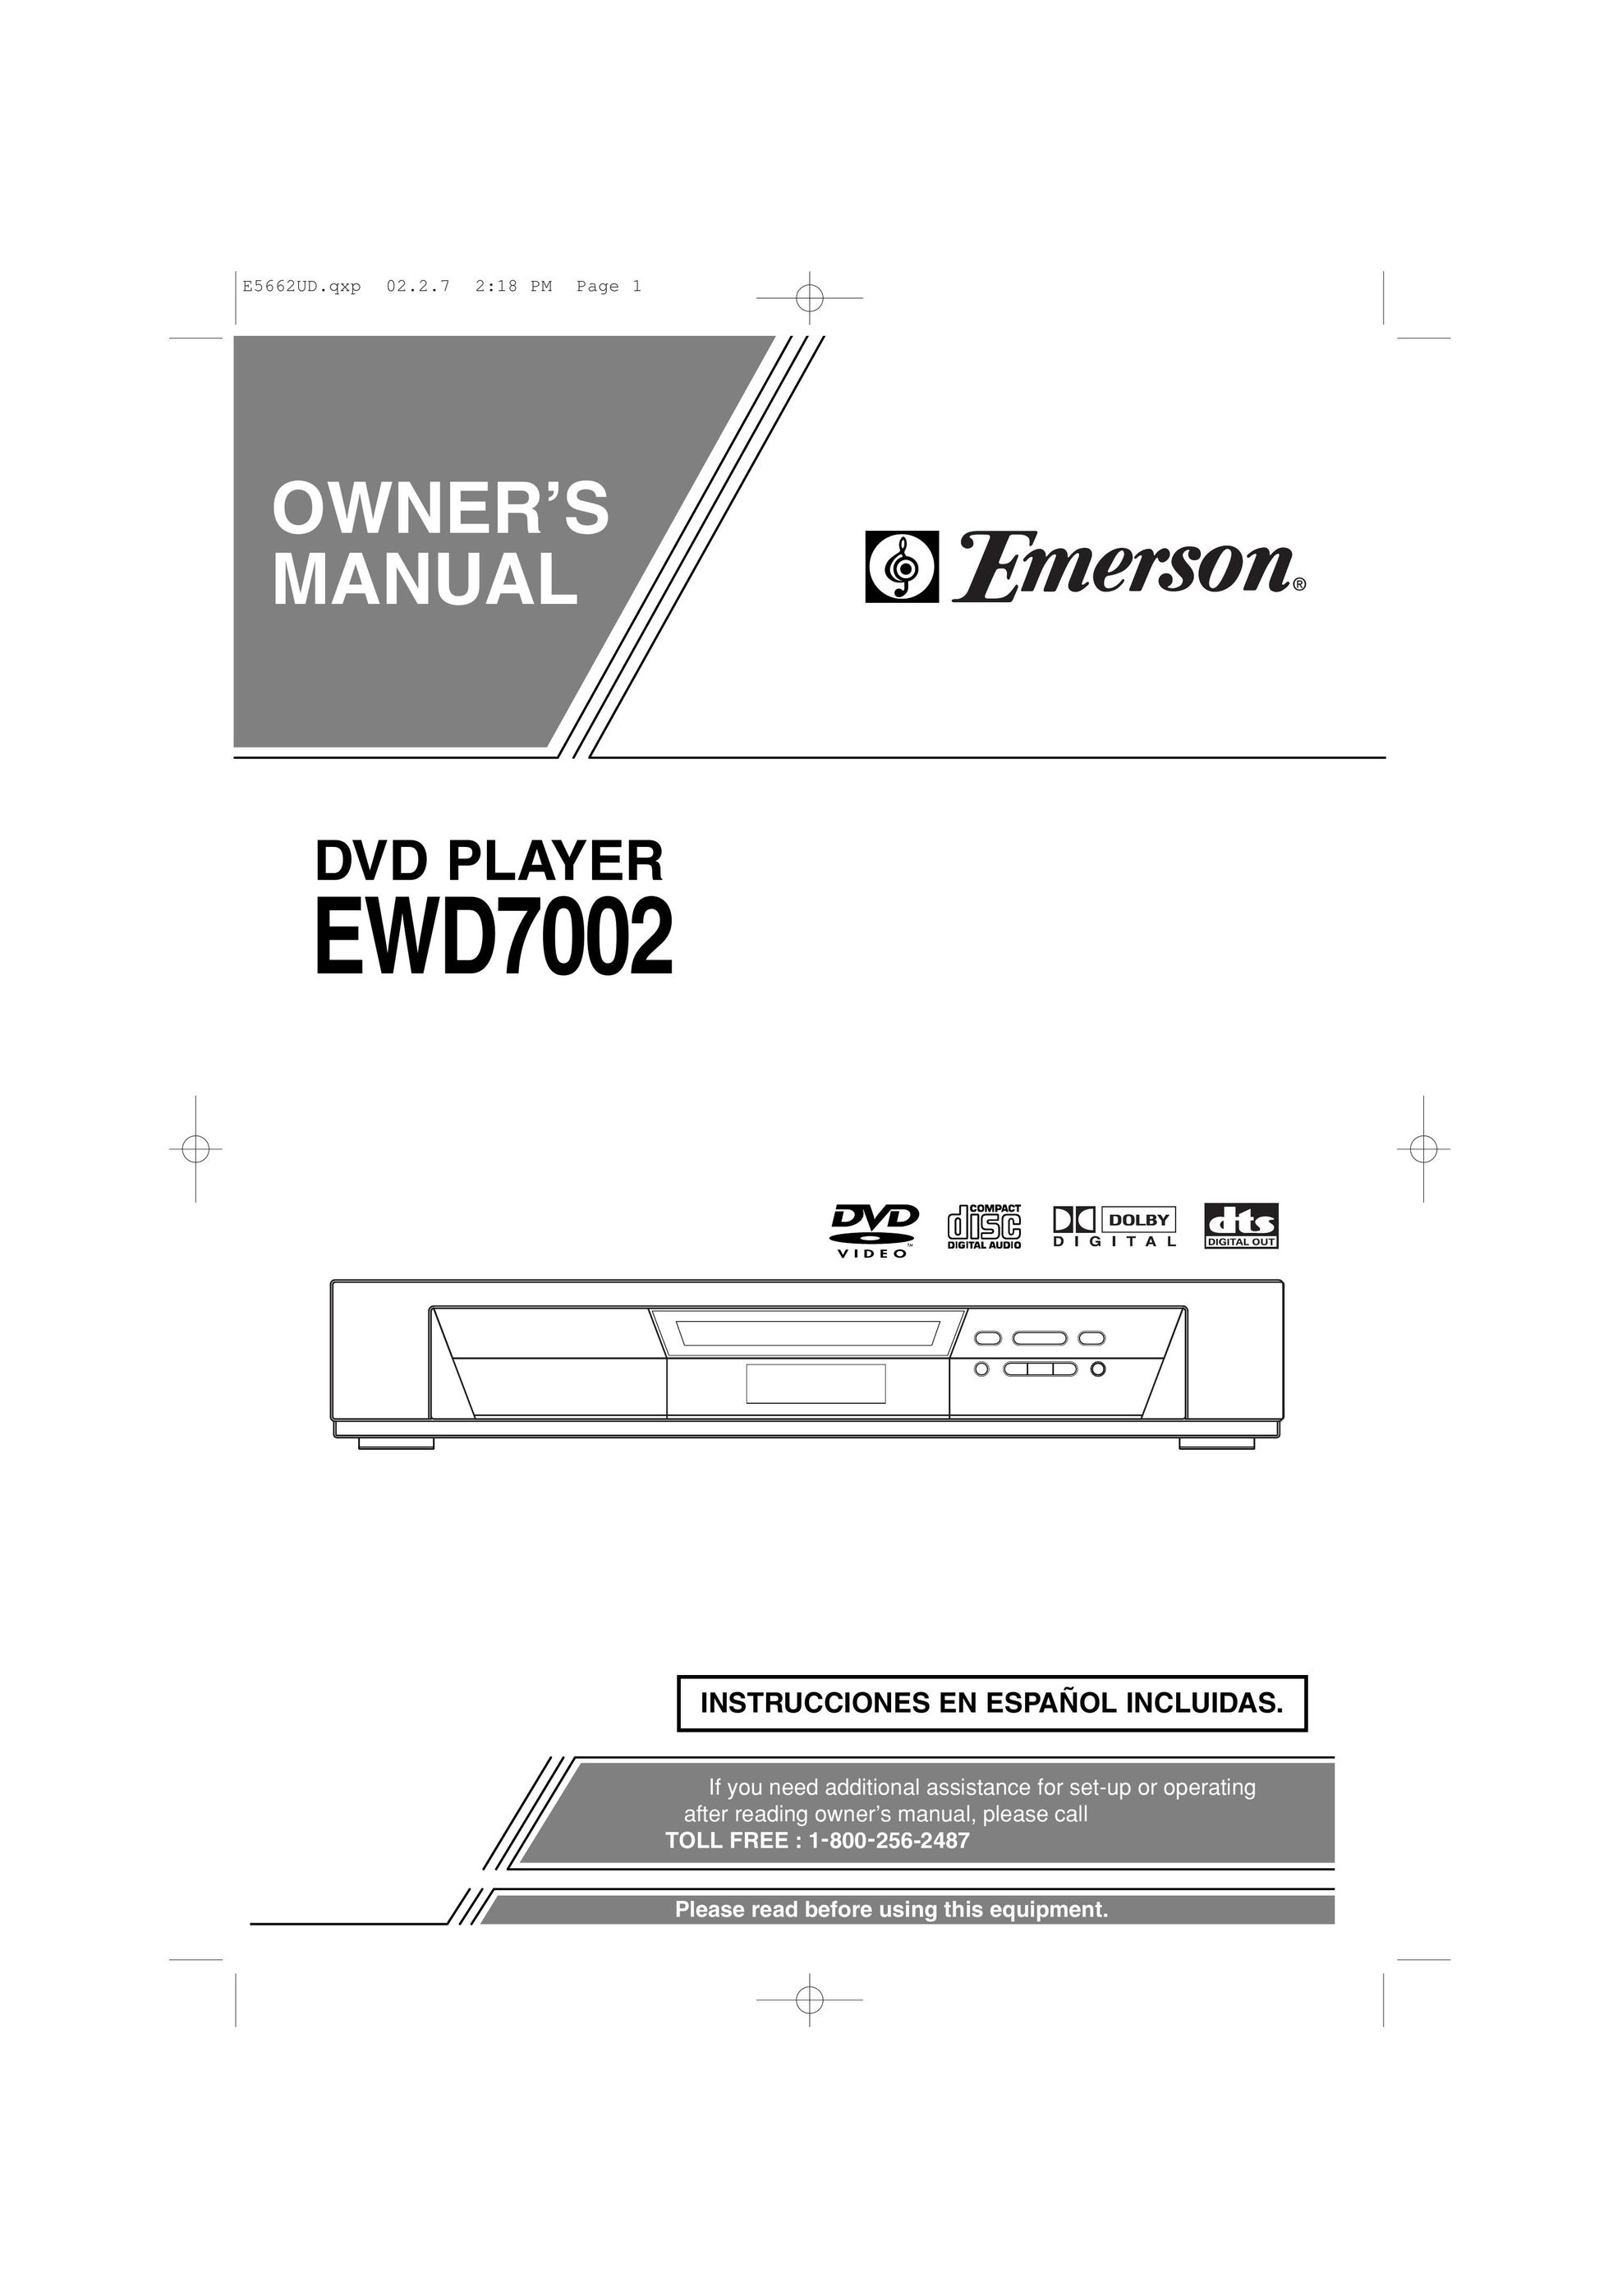 Emerson EWD7002 DVD Player User Manual